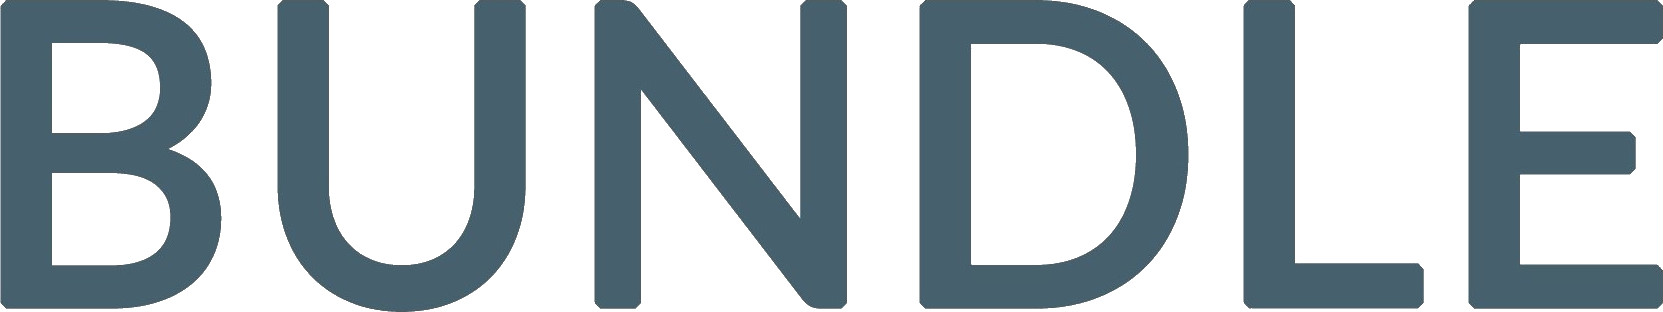 logo bundle